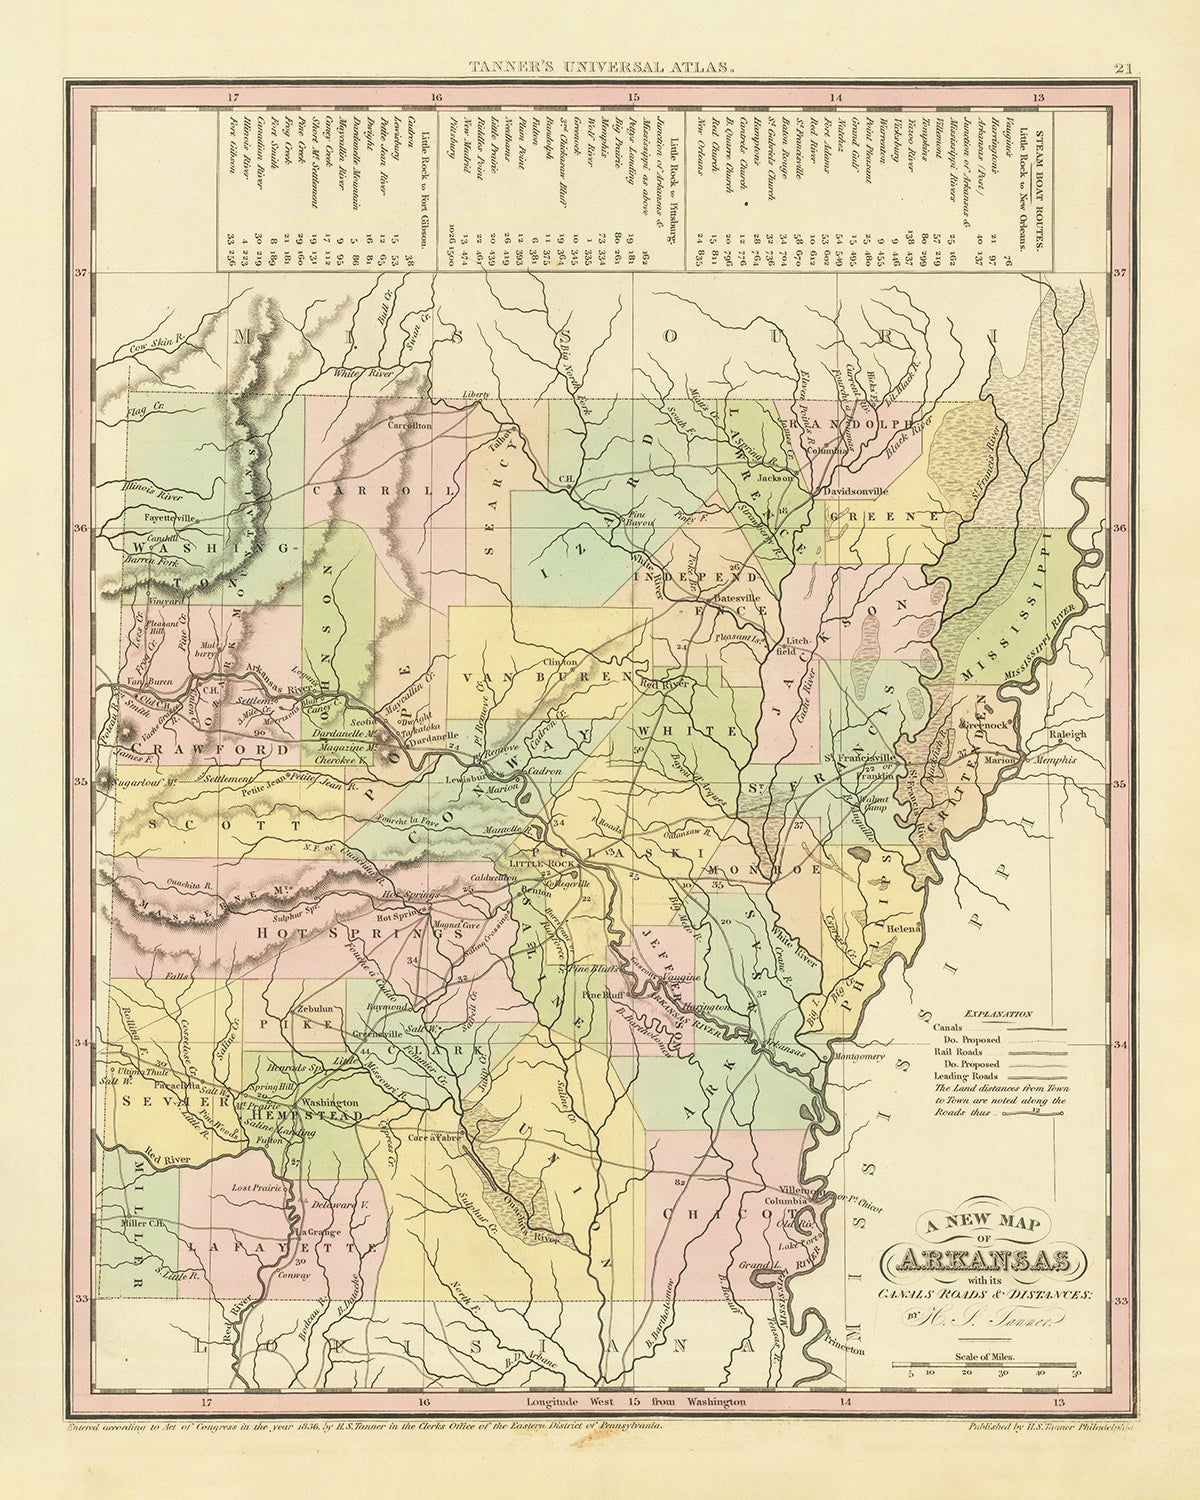 Mapa antiguo de Arkansas por H. S. Tanner, 1836: Little Rock, Fort Smith, Pine Bluff, Batesville, Washington, Carreteras, Ferrocarril, Canales